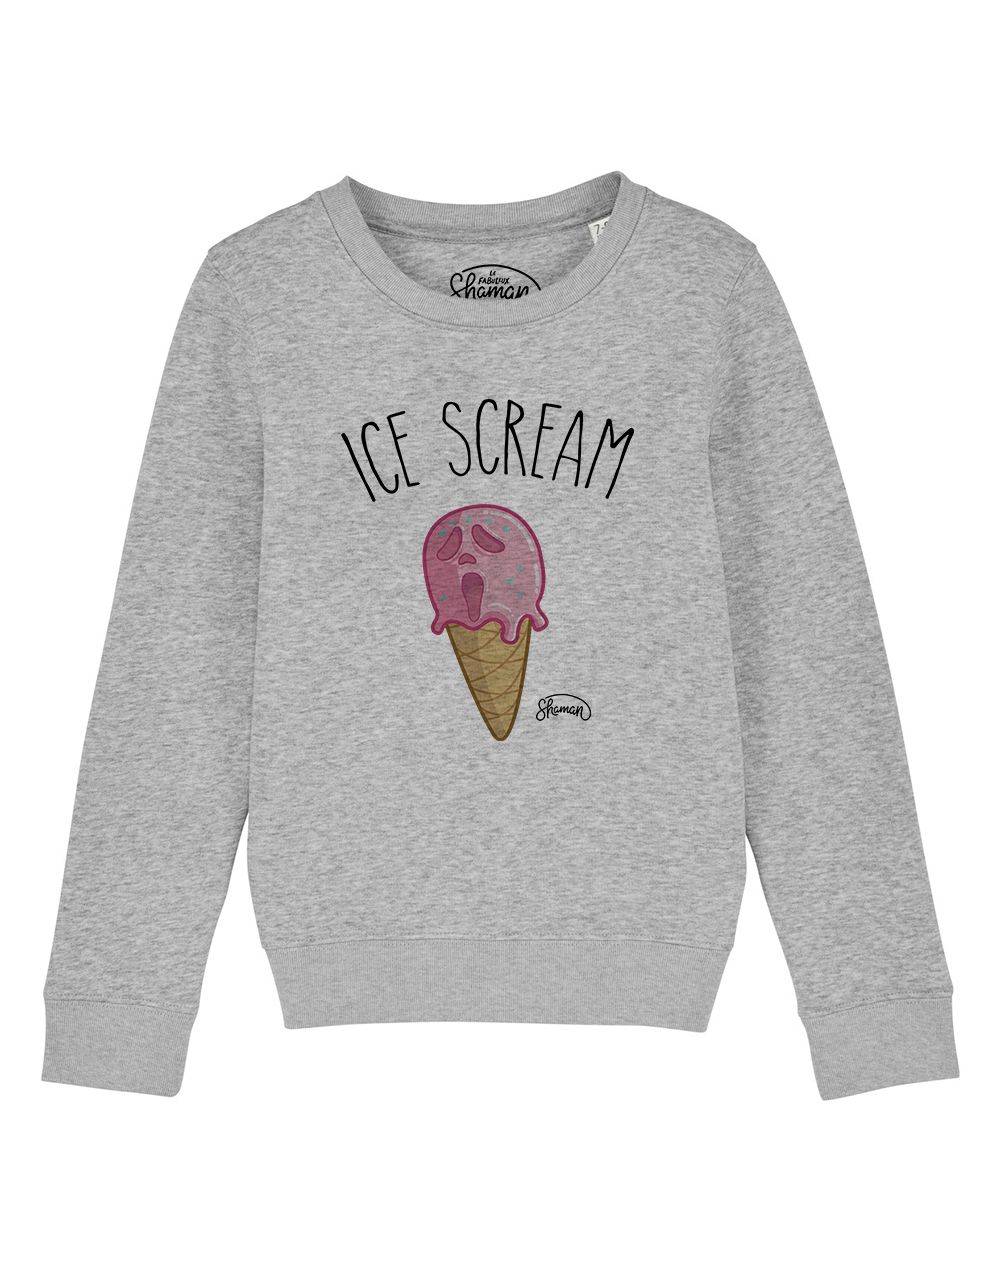 Sweat "Ice cream"